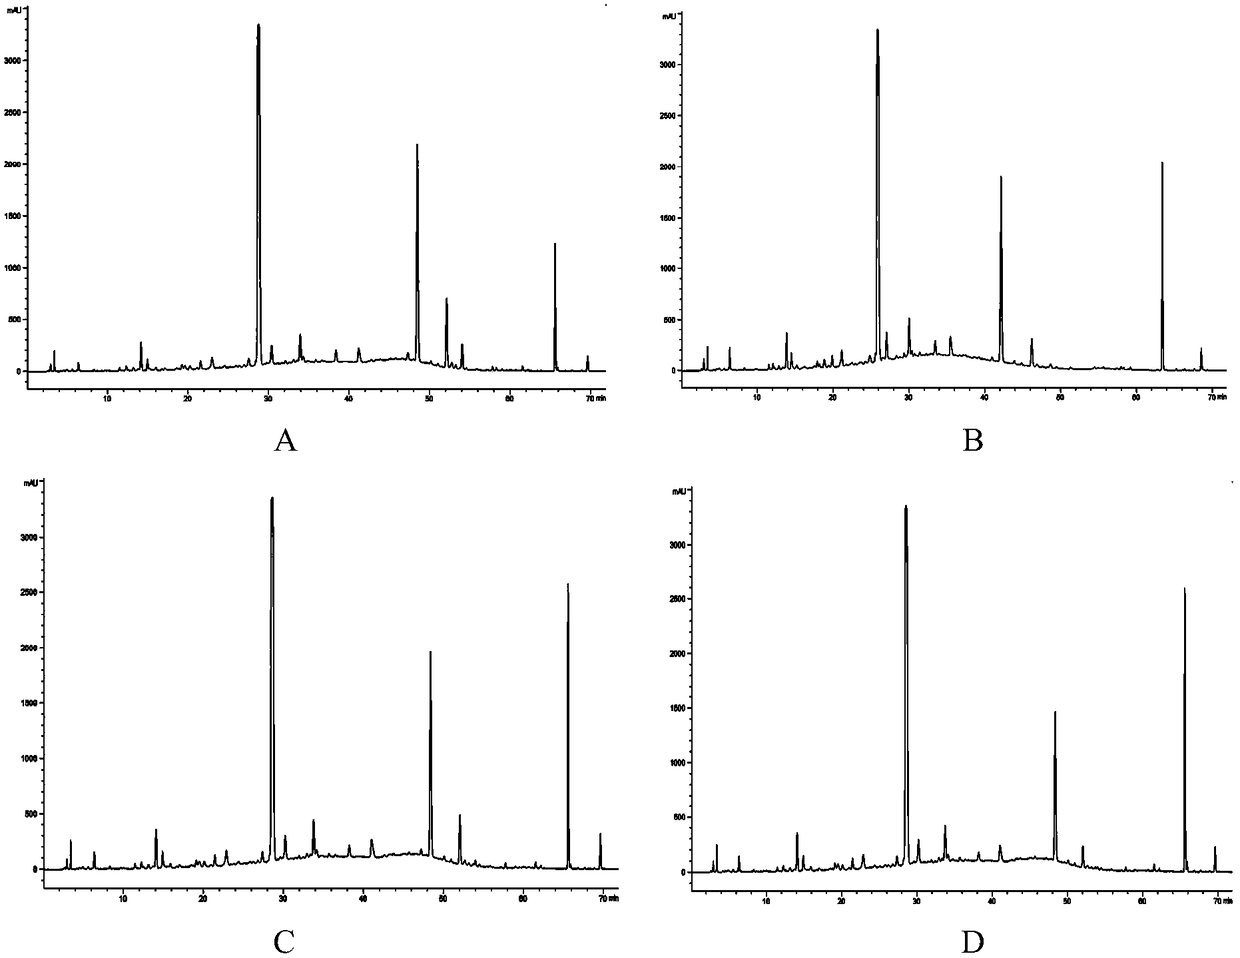 Detection method of hplc fingerprint of Radix Polygoni Multiflori